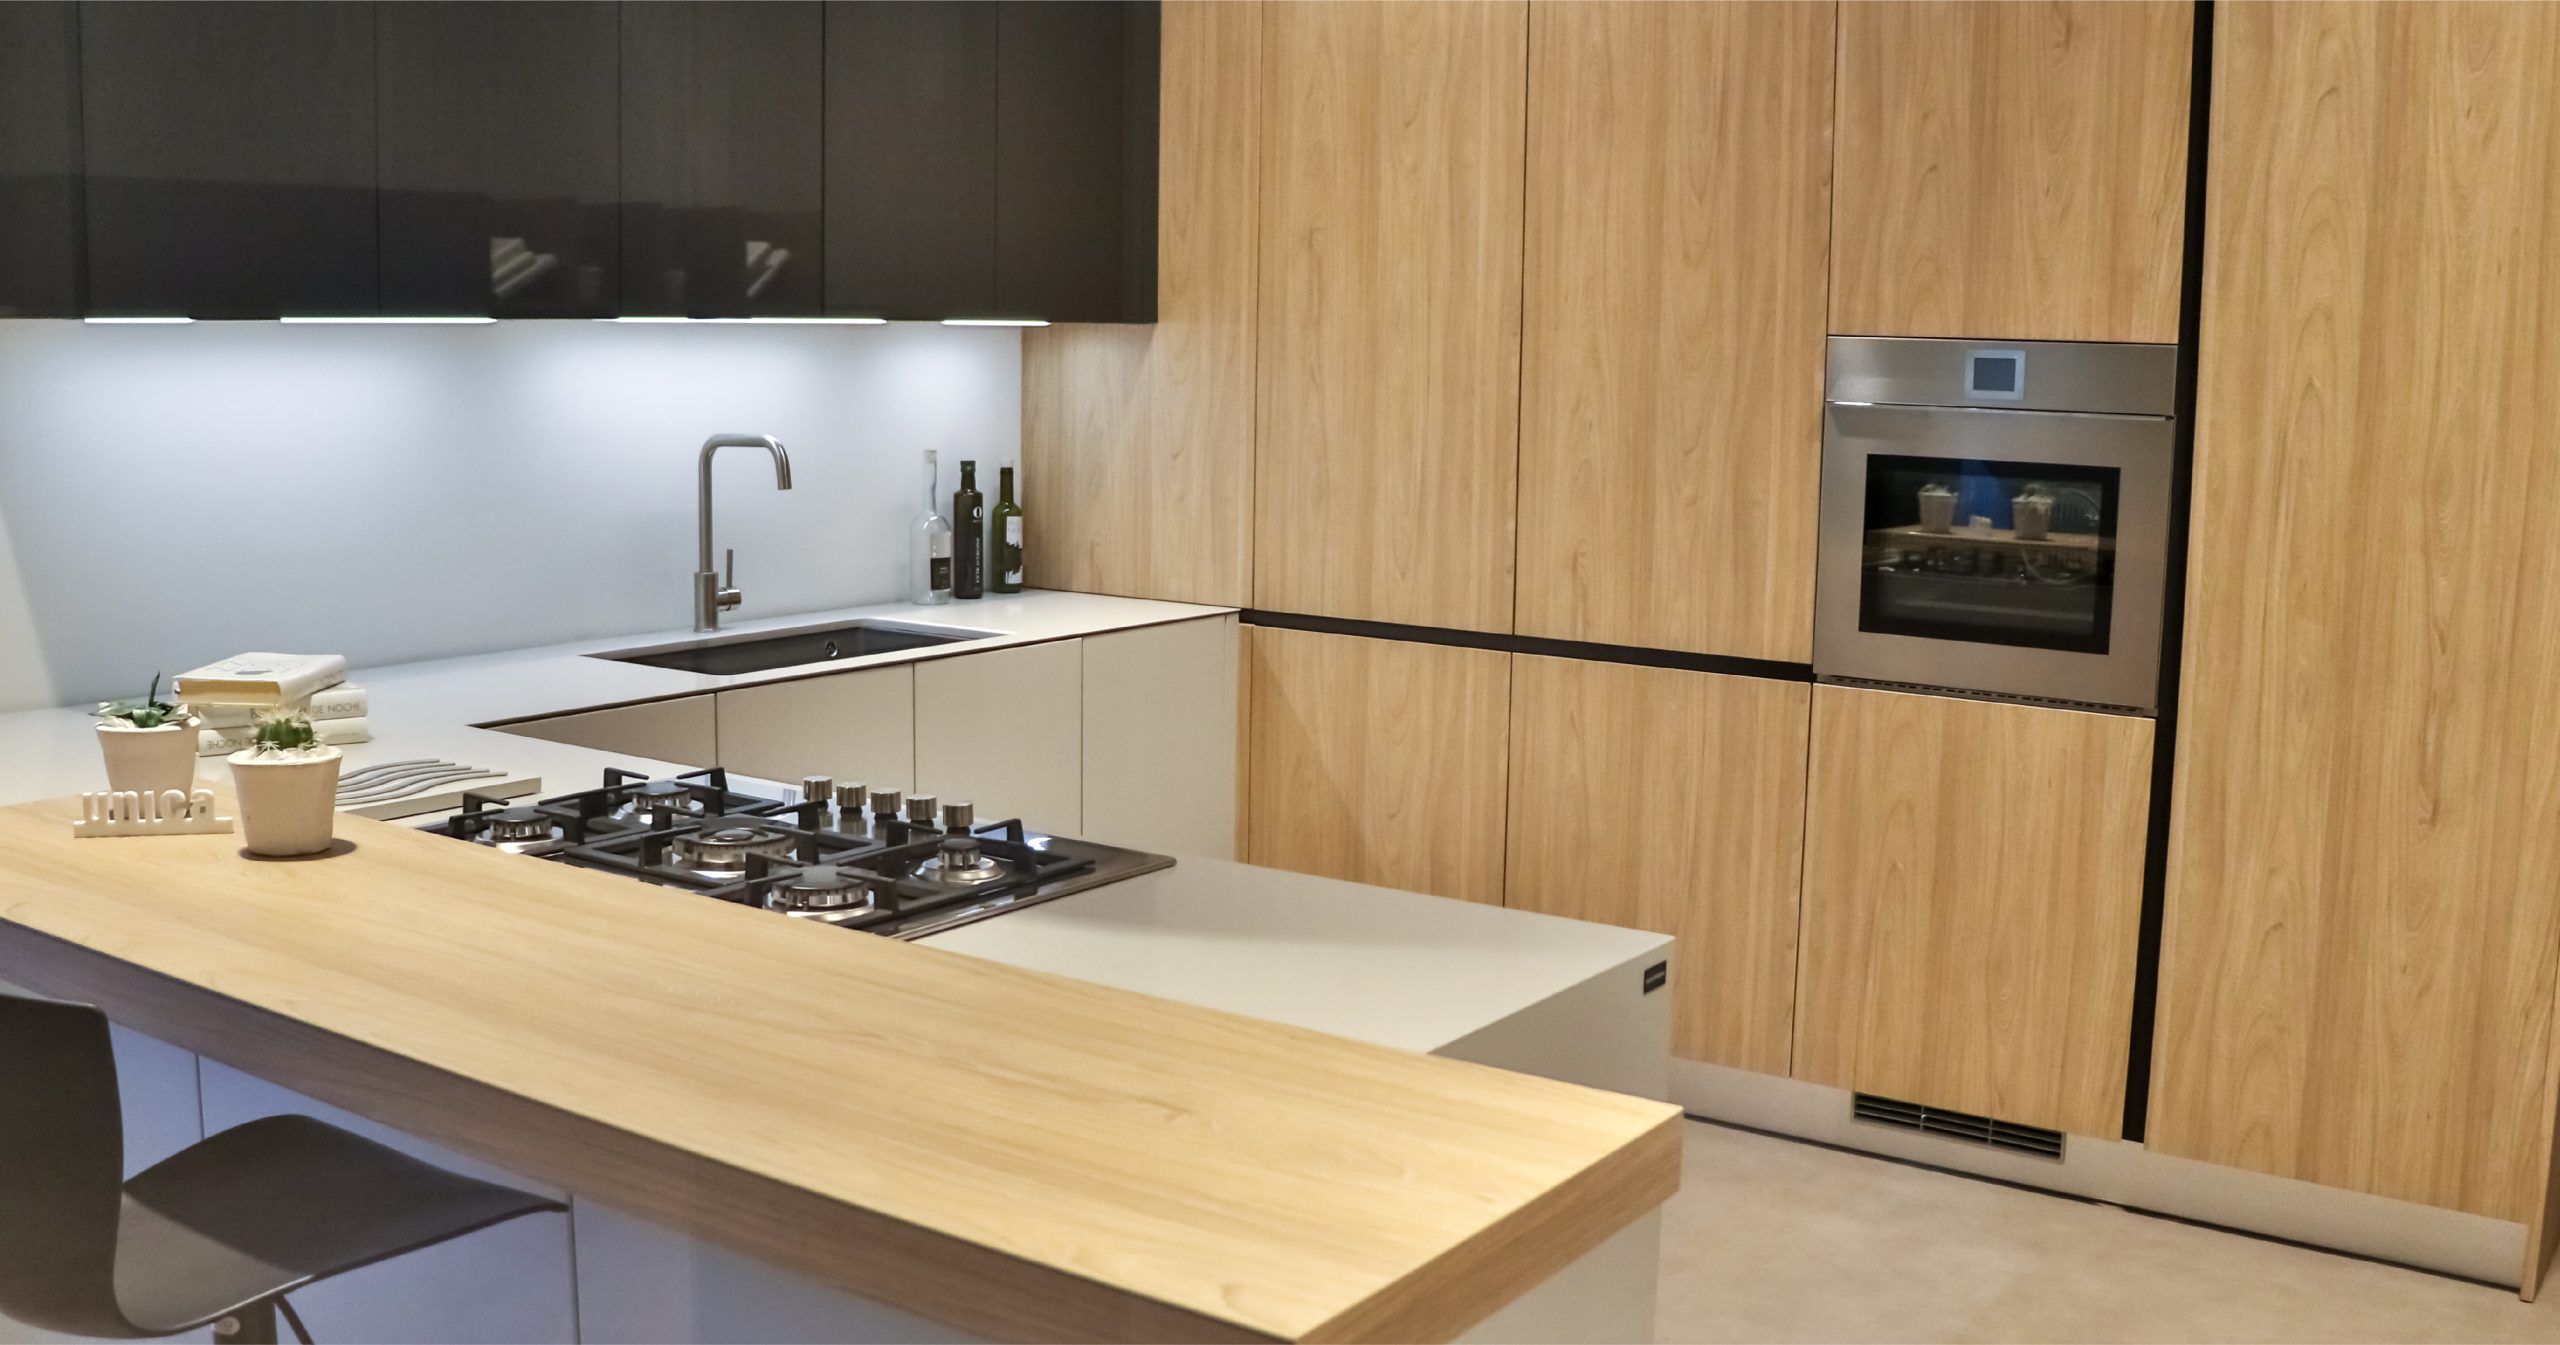 kitchen kitwood design